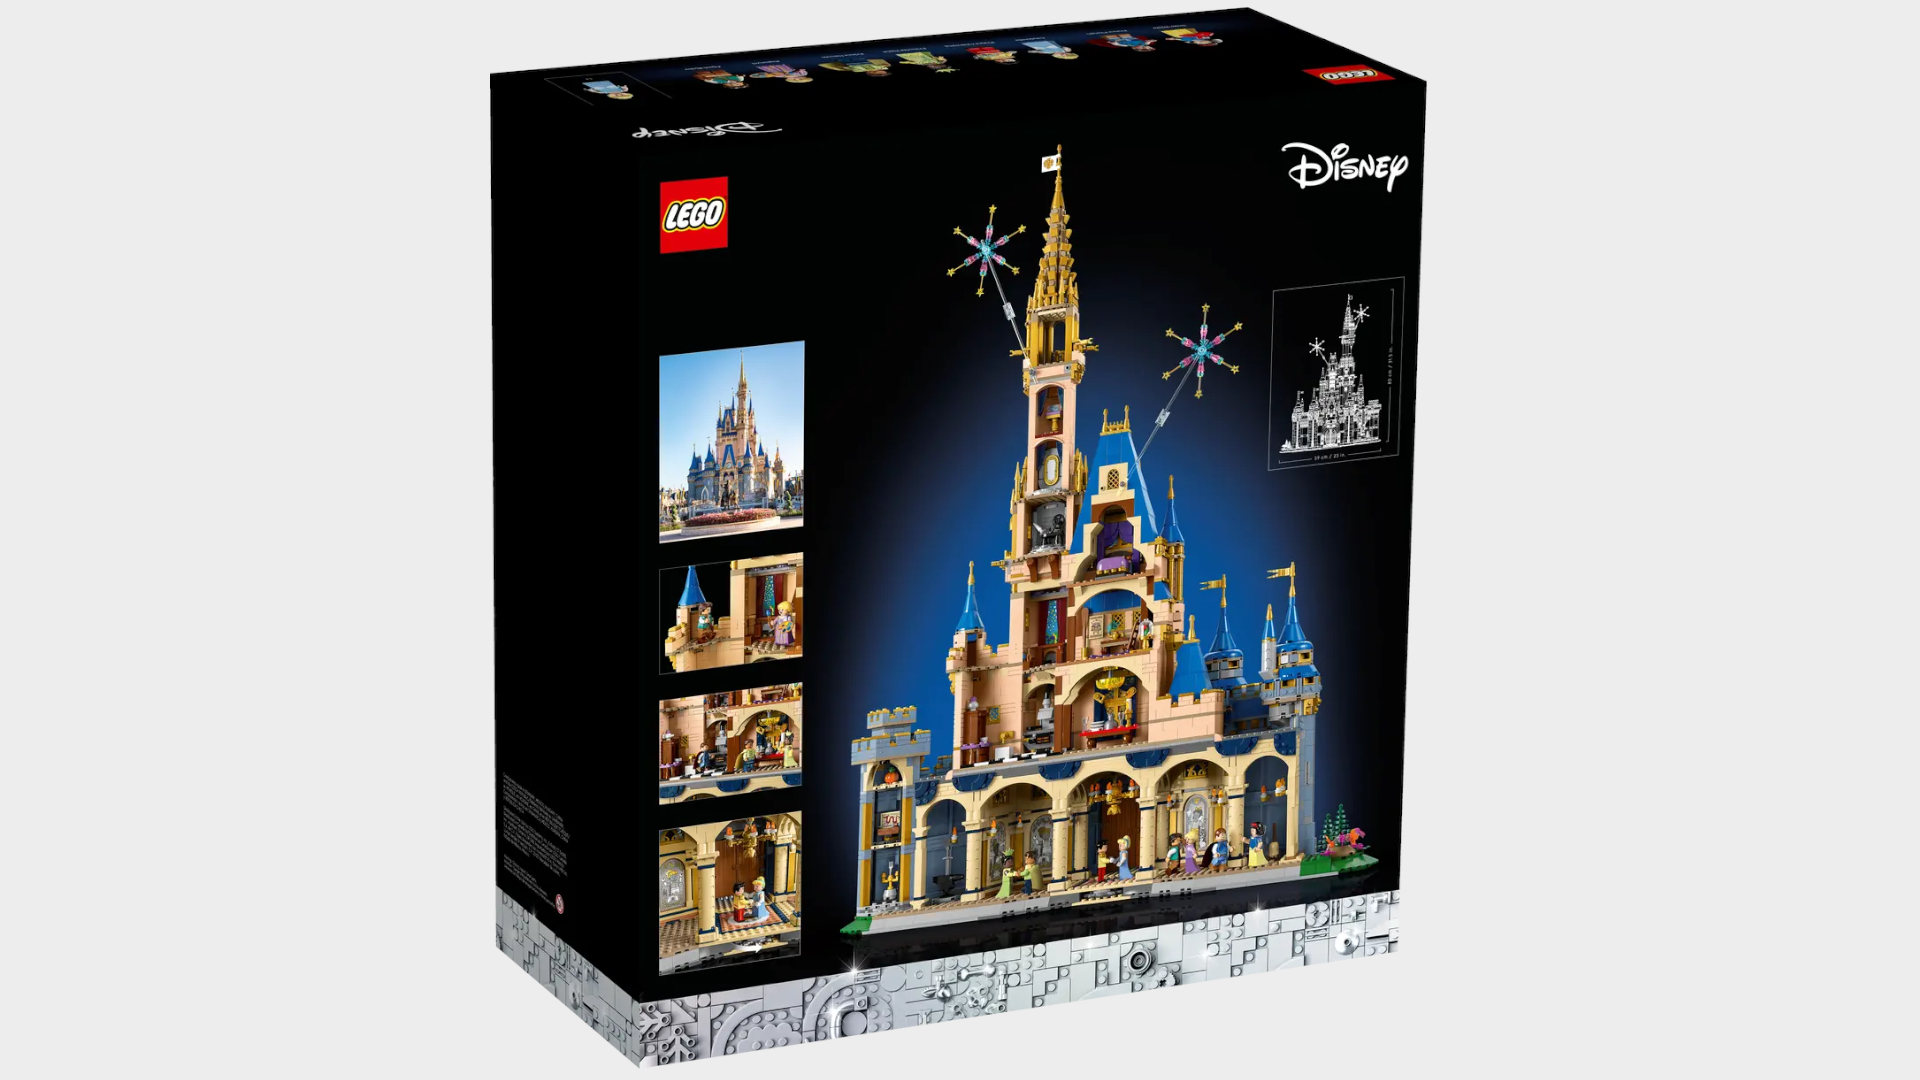 Lego Disney Castle box back on a plain background